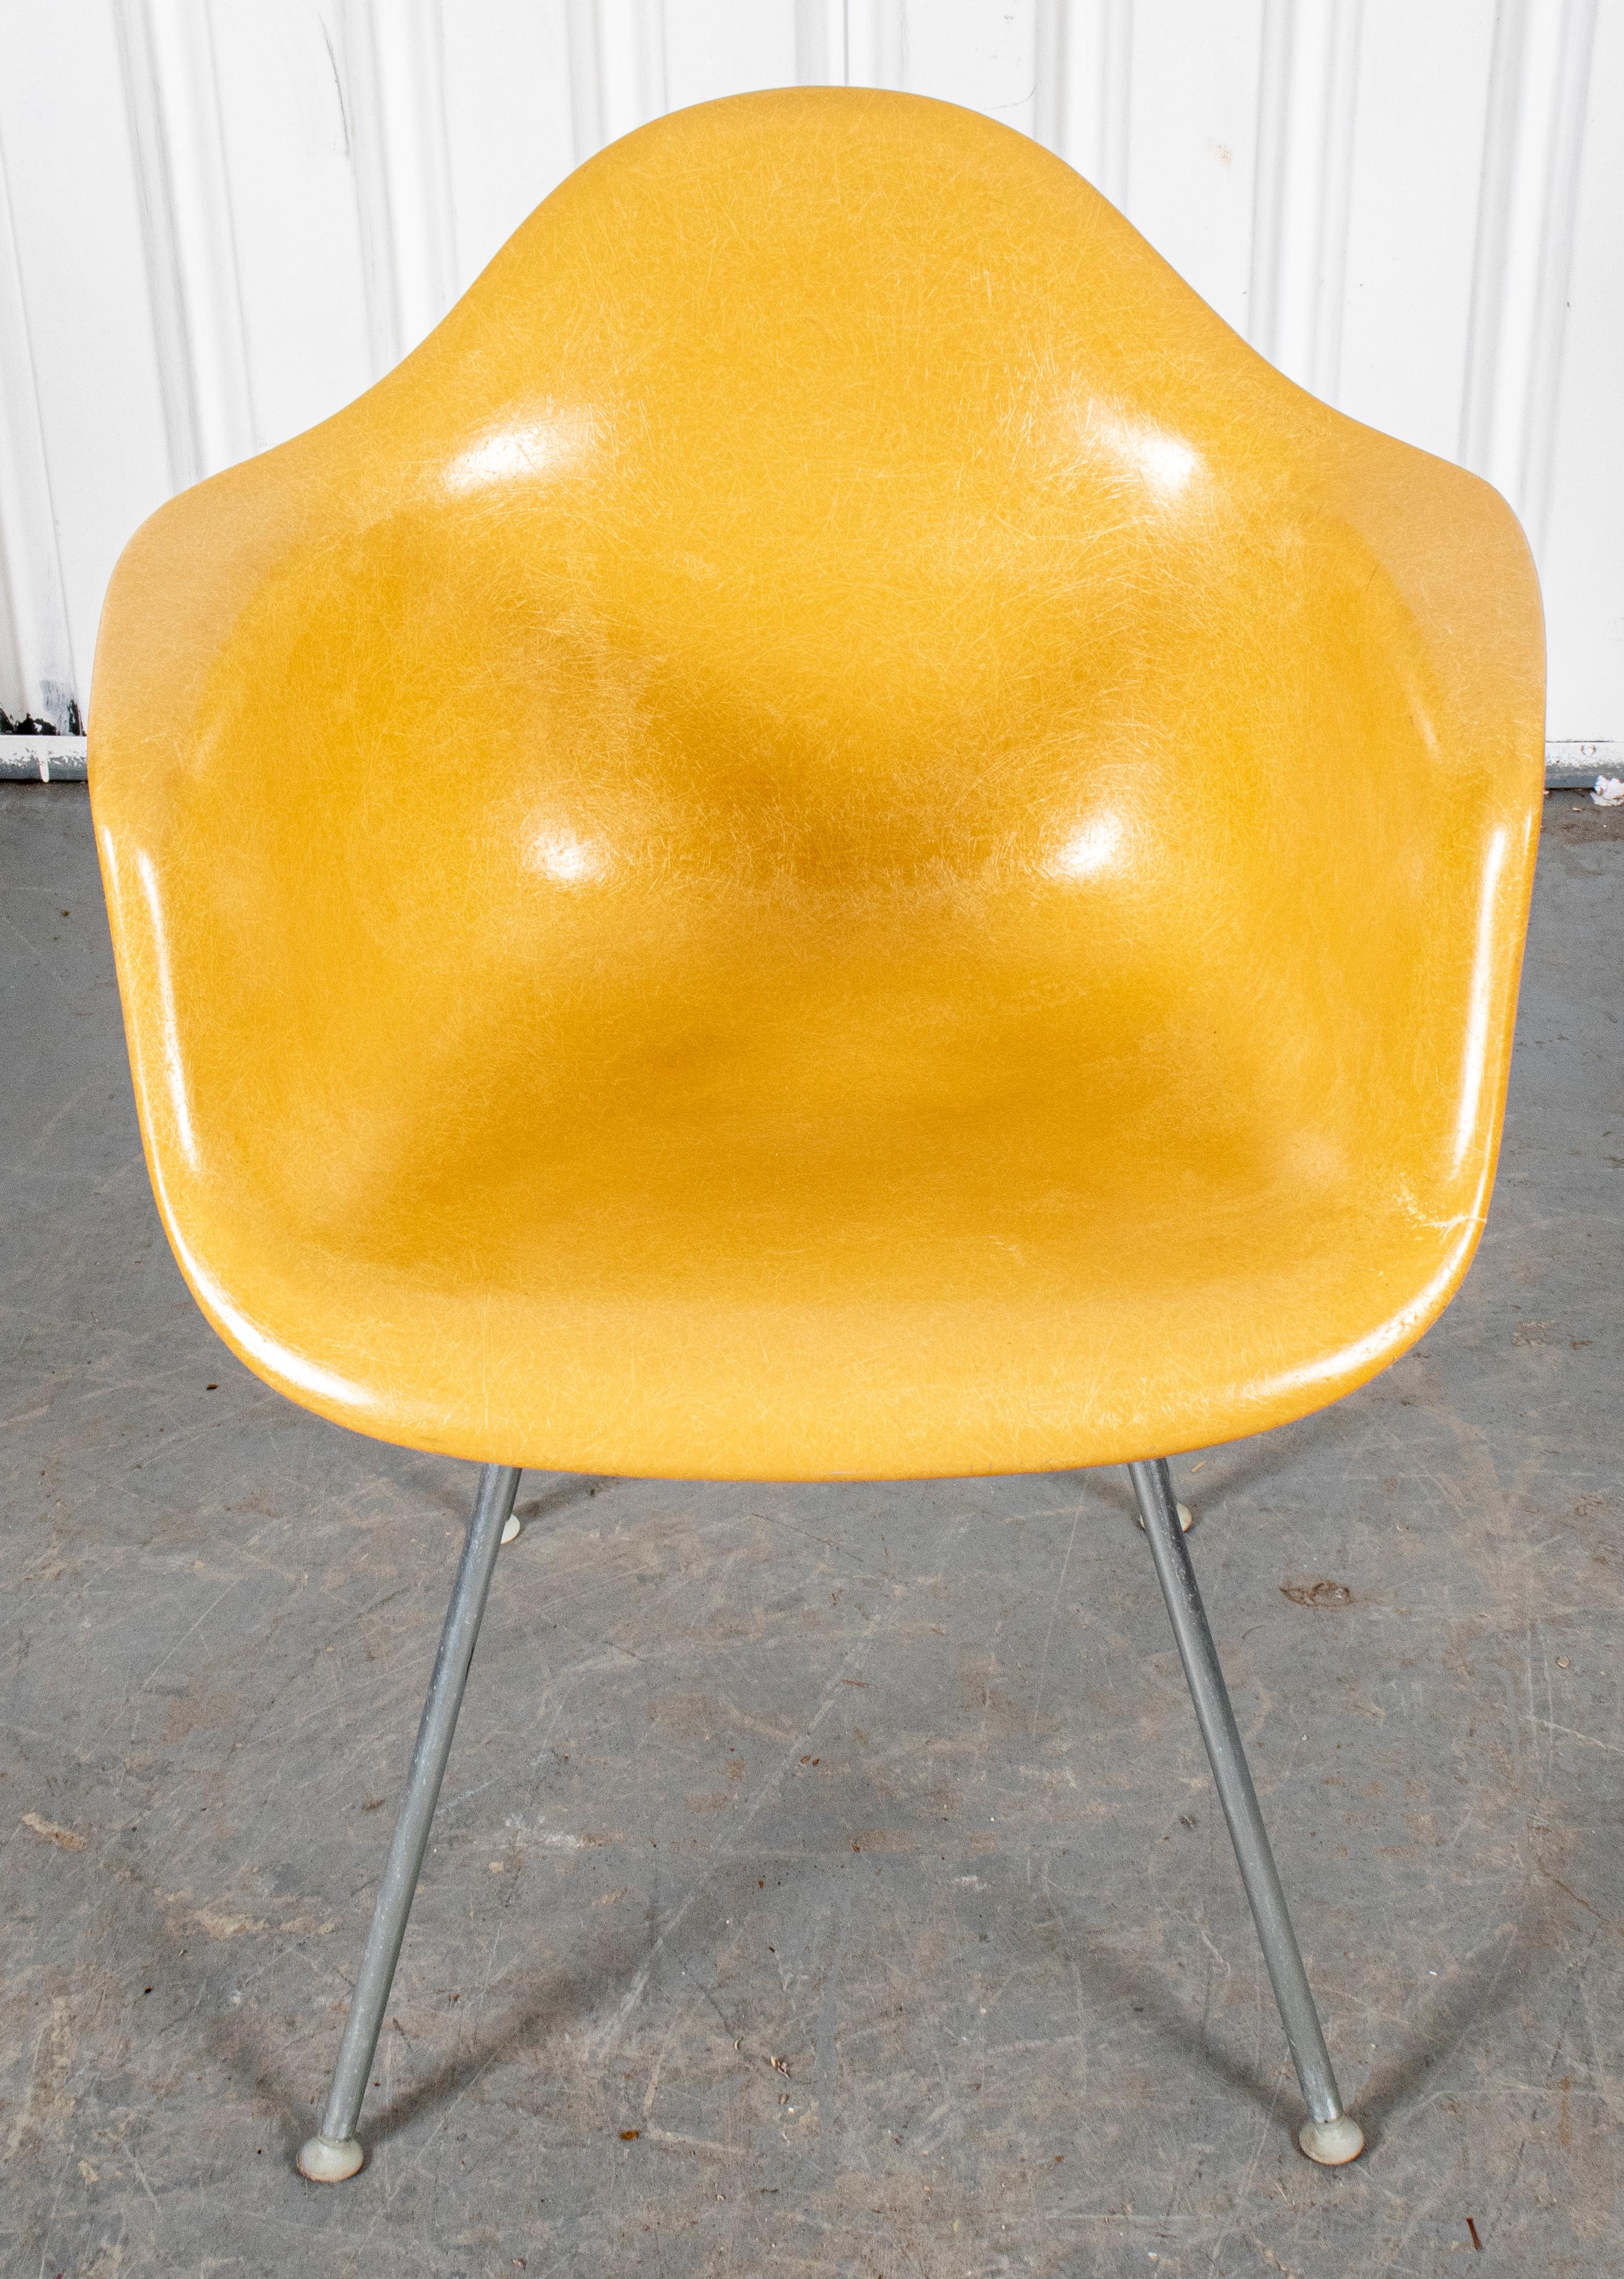 Eames for Herman Miller Mid-Century Modern shell chair, makers mark on bottom.

Measurements: 31.5